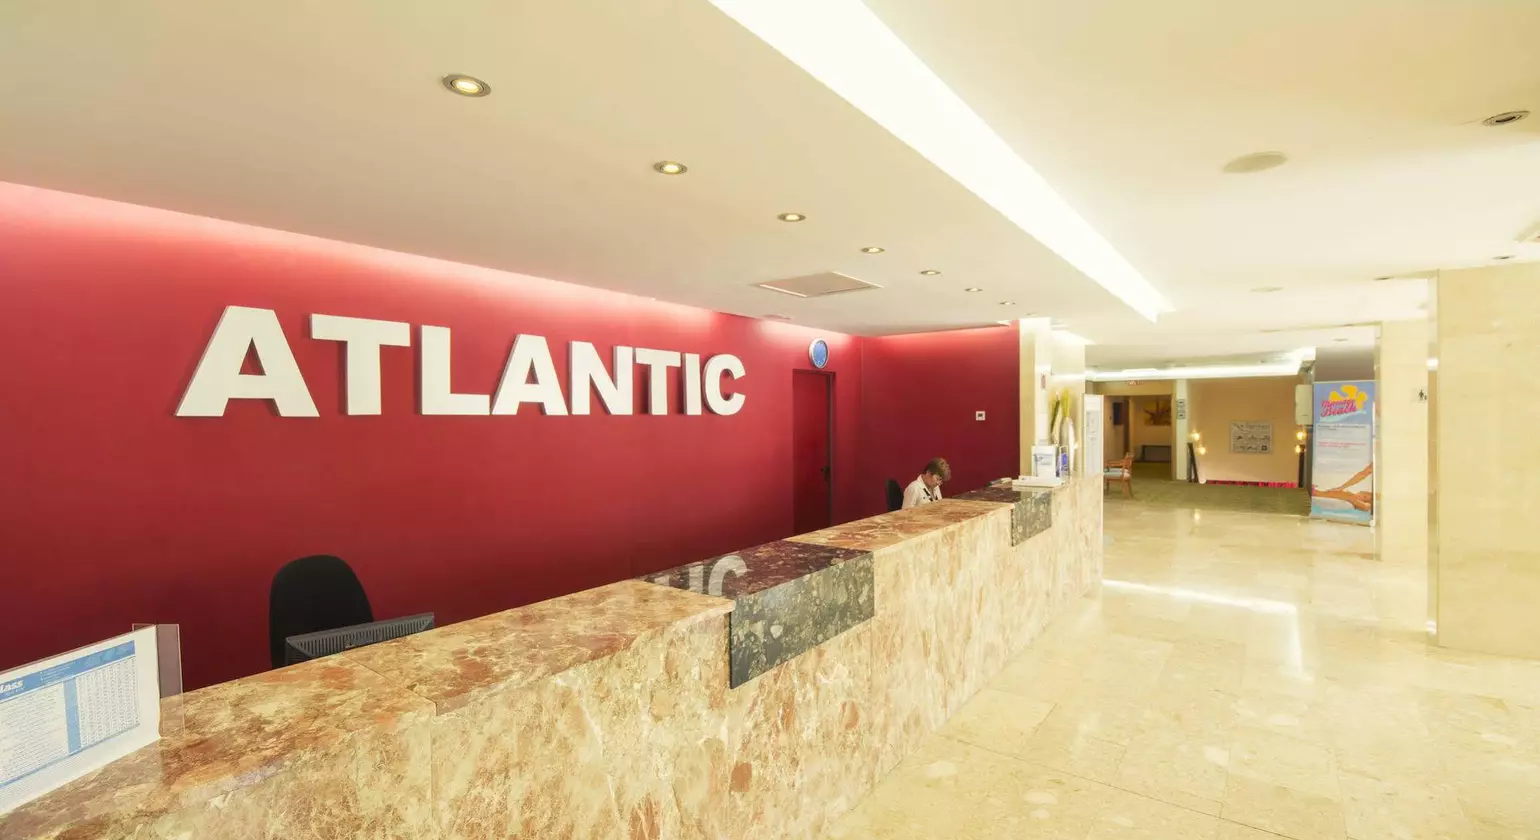 azuLine Hotel Atlantic